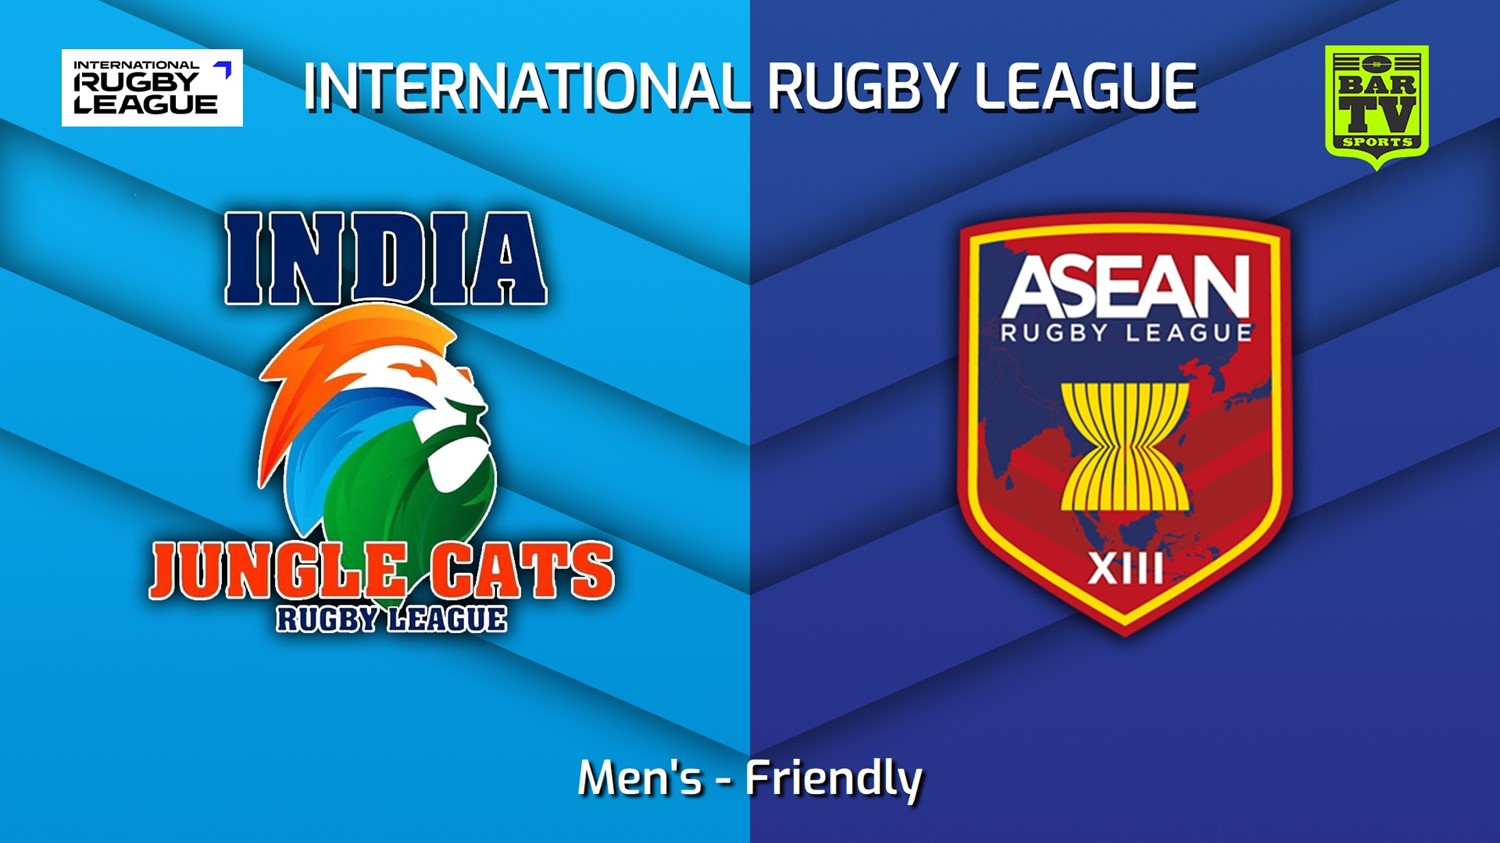 221009-International RL Friendly - Men's - India Jungle cats v ASEAN XIII Minigame Slate Image